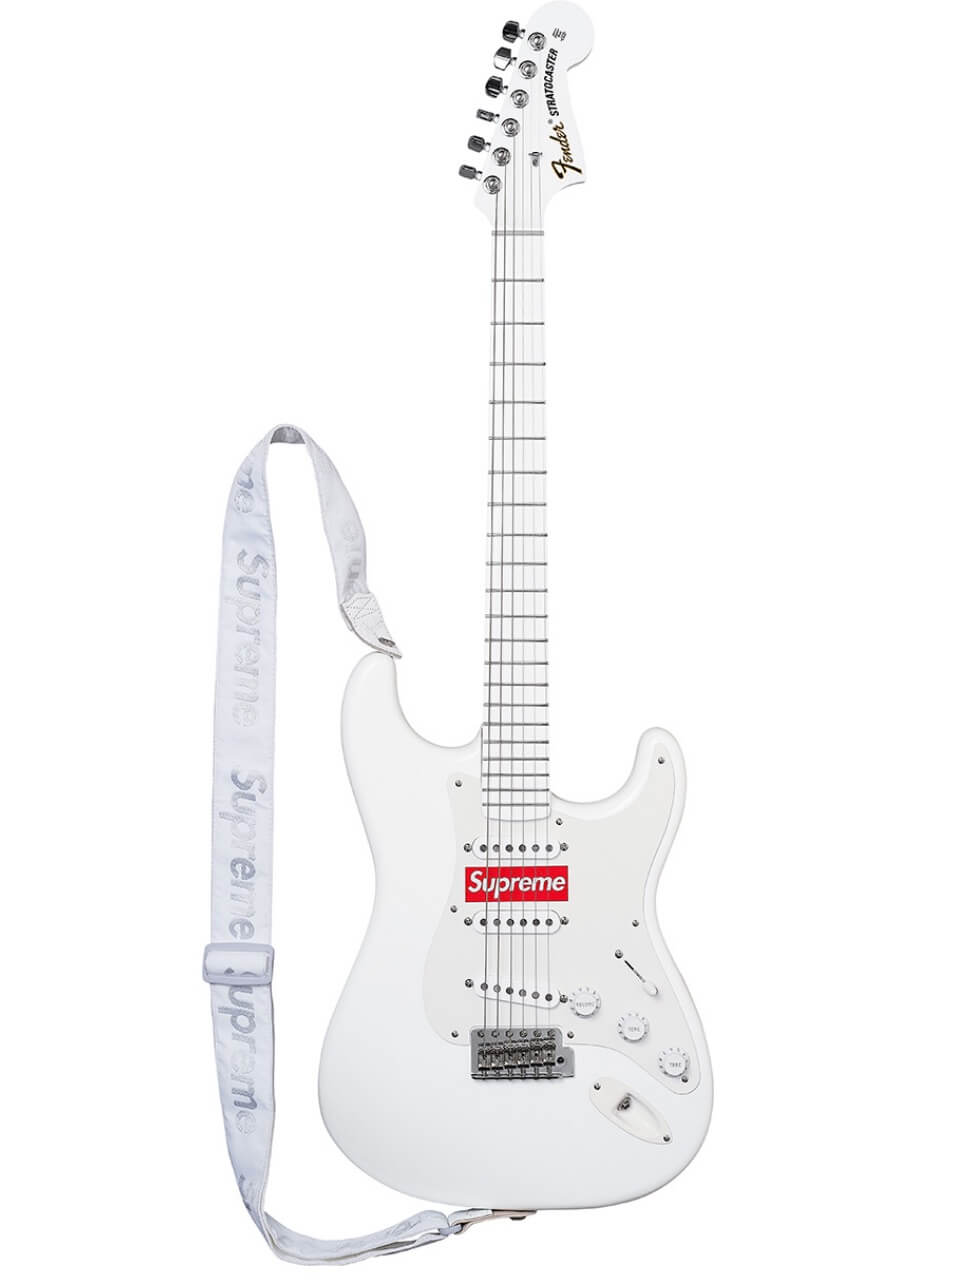 Fender Supreme Stratocaster (2017)